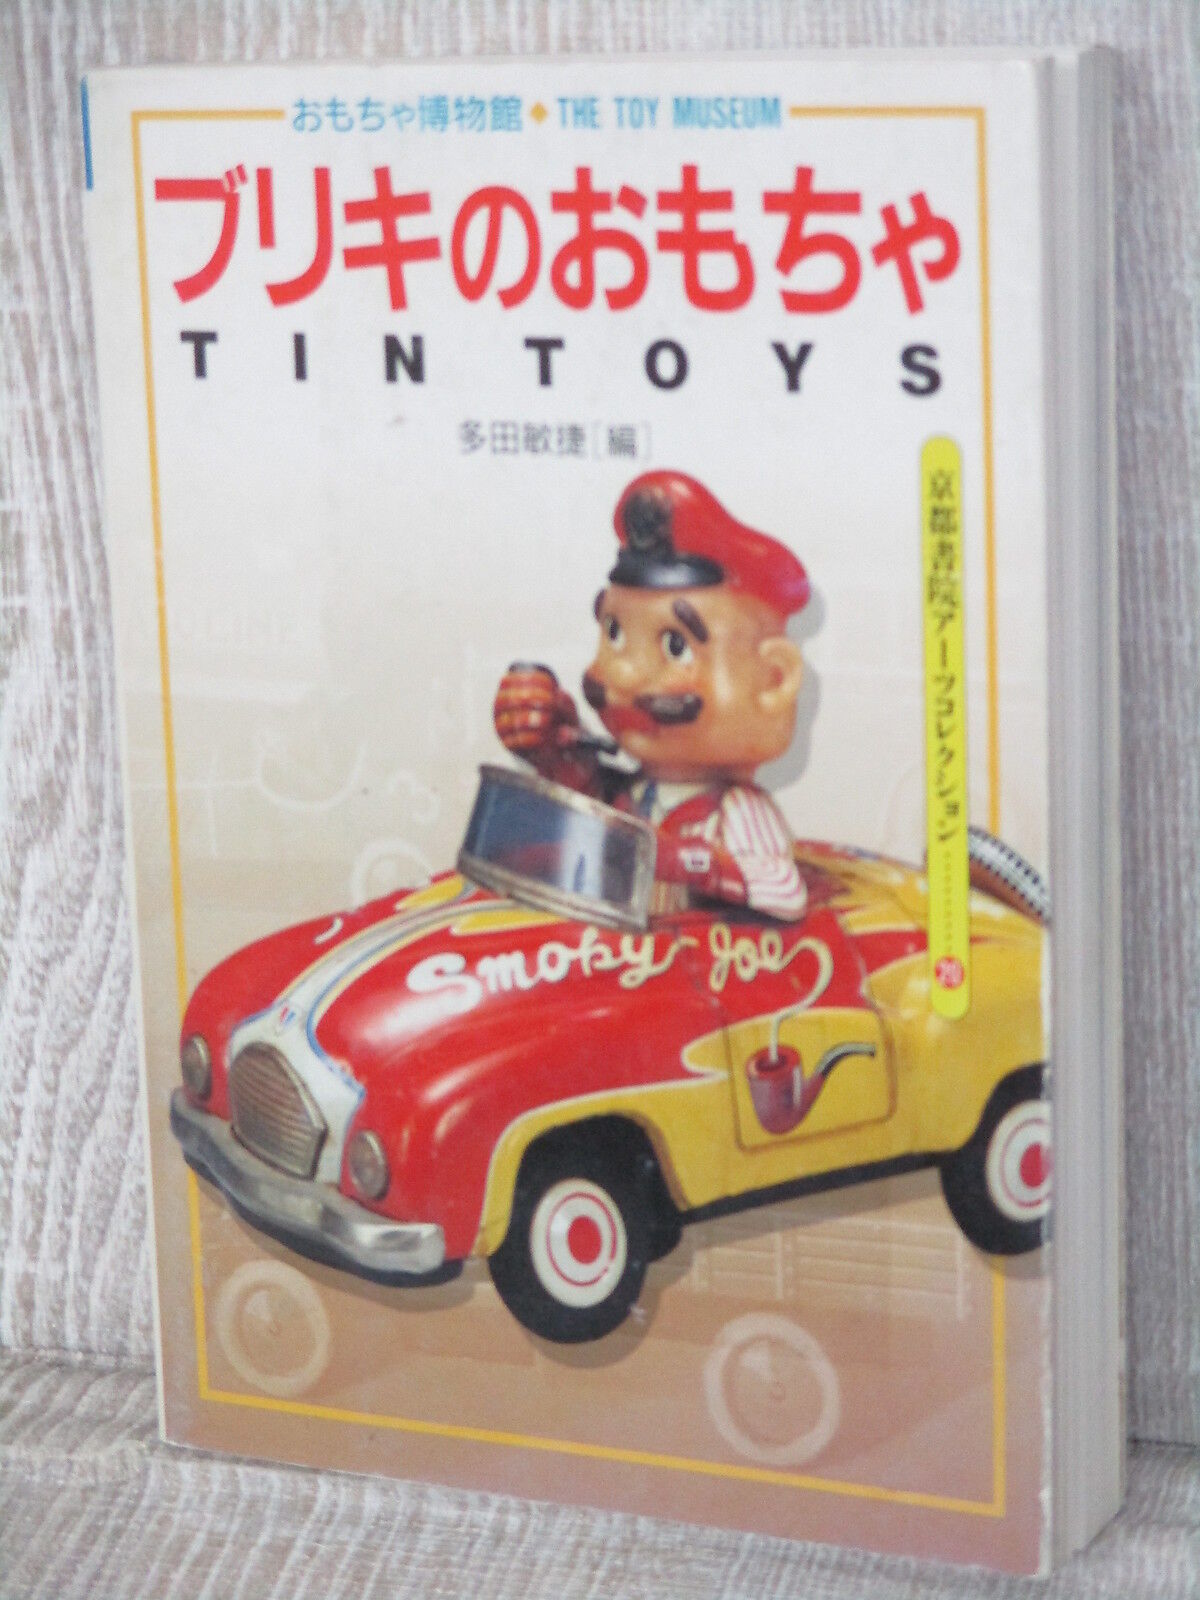 TIN TOYS Photo Book Guide Pictorial Japan Art Masudaya Yonezawa Marusan 03*